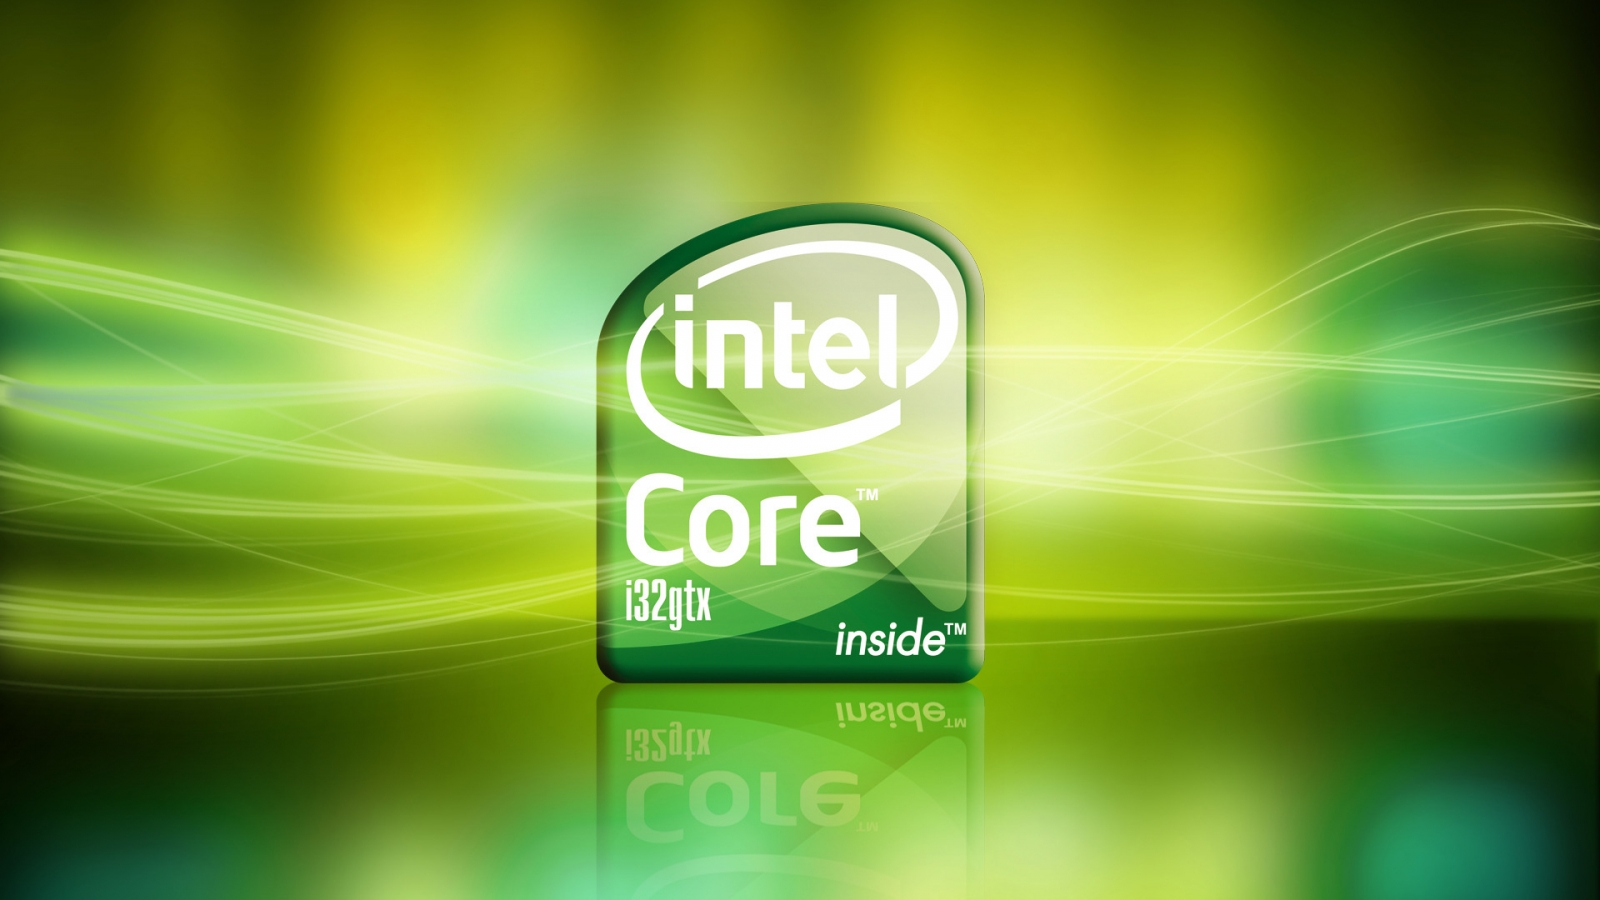 Intel Core i32gtx for 1600 x 900 HDTV resolution